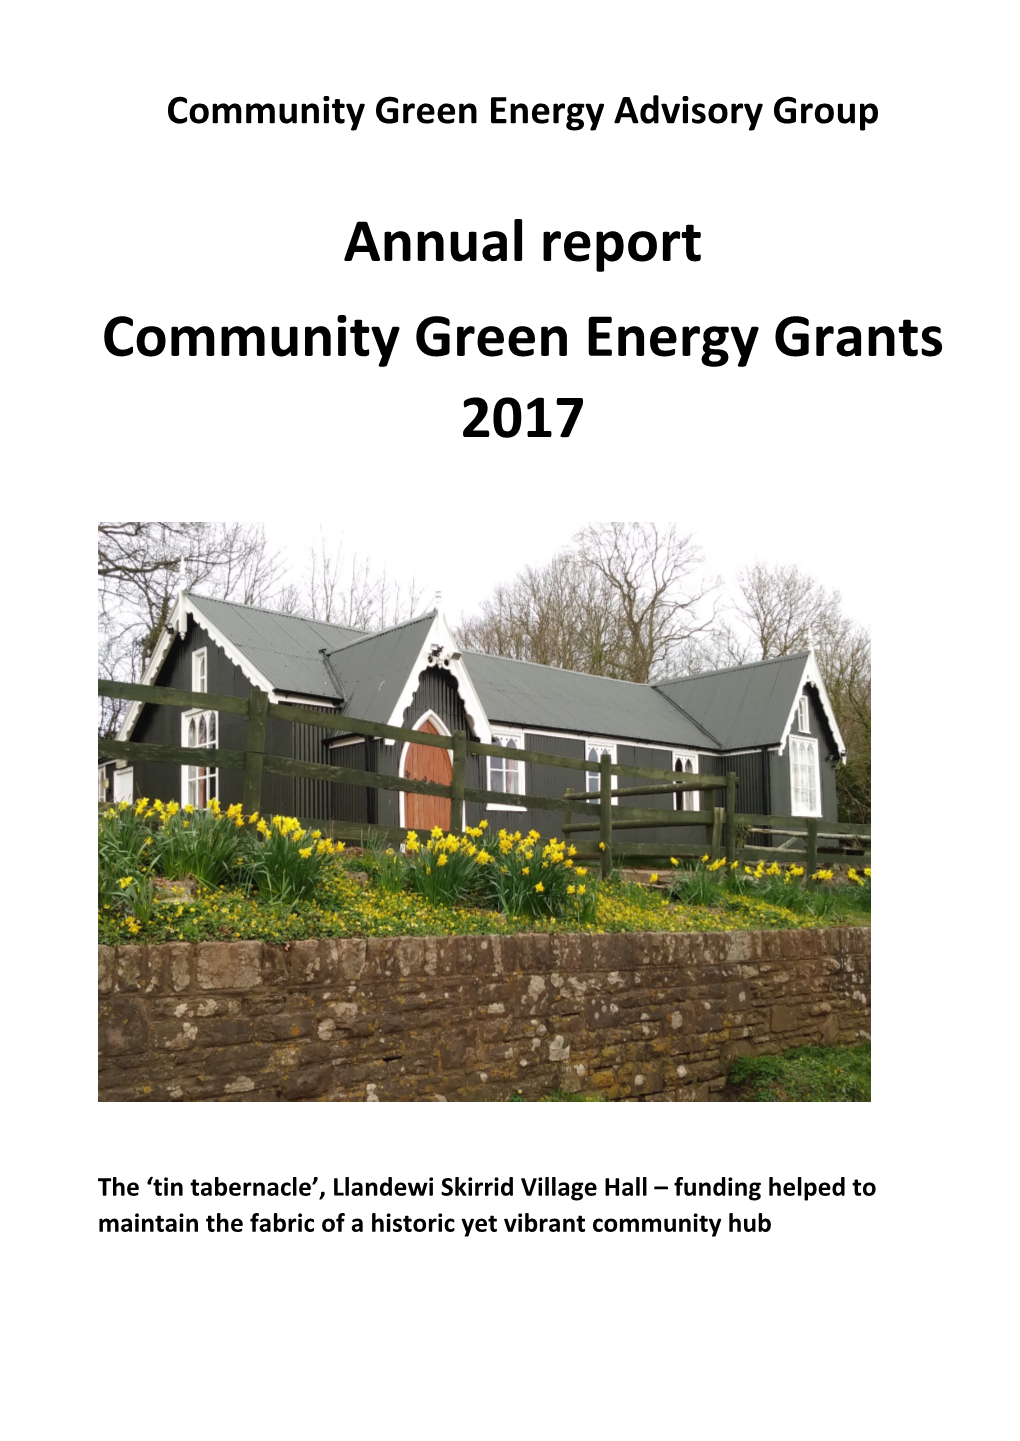 Annual Report Community Green Energy Grants 2017